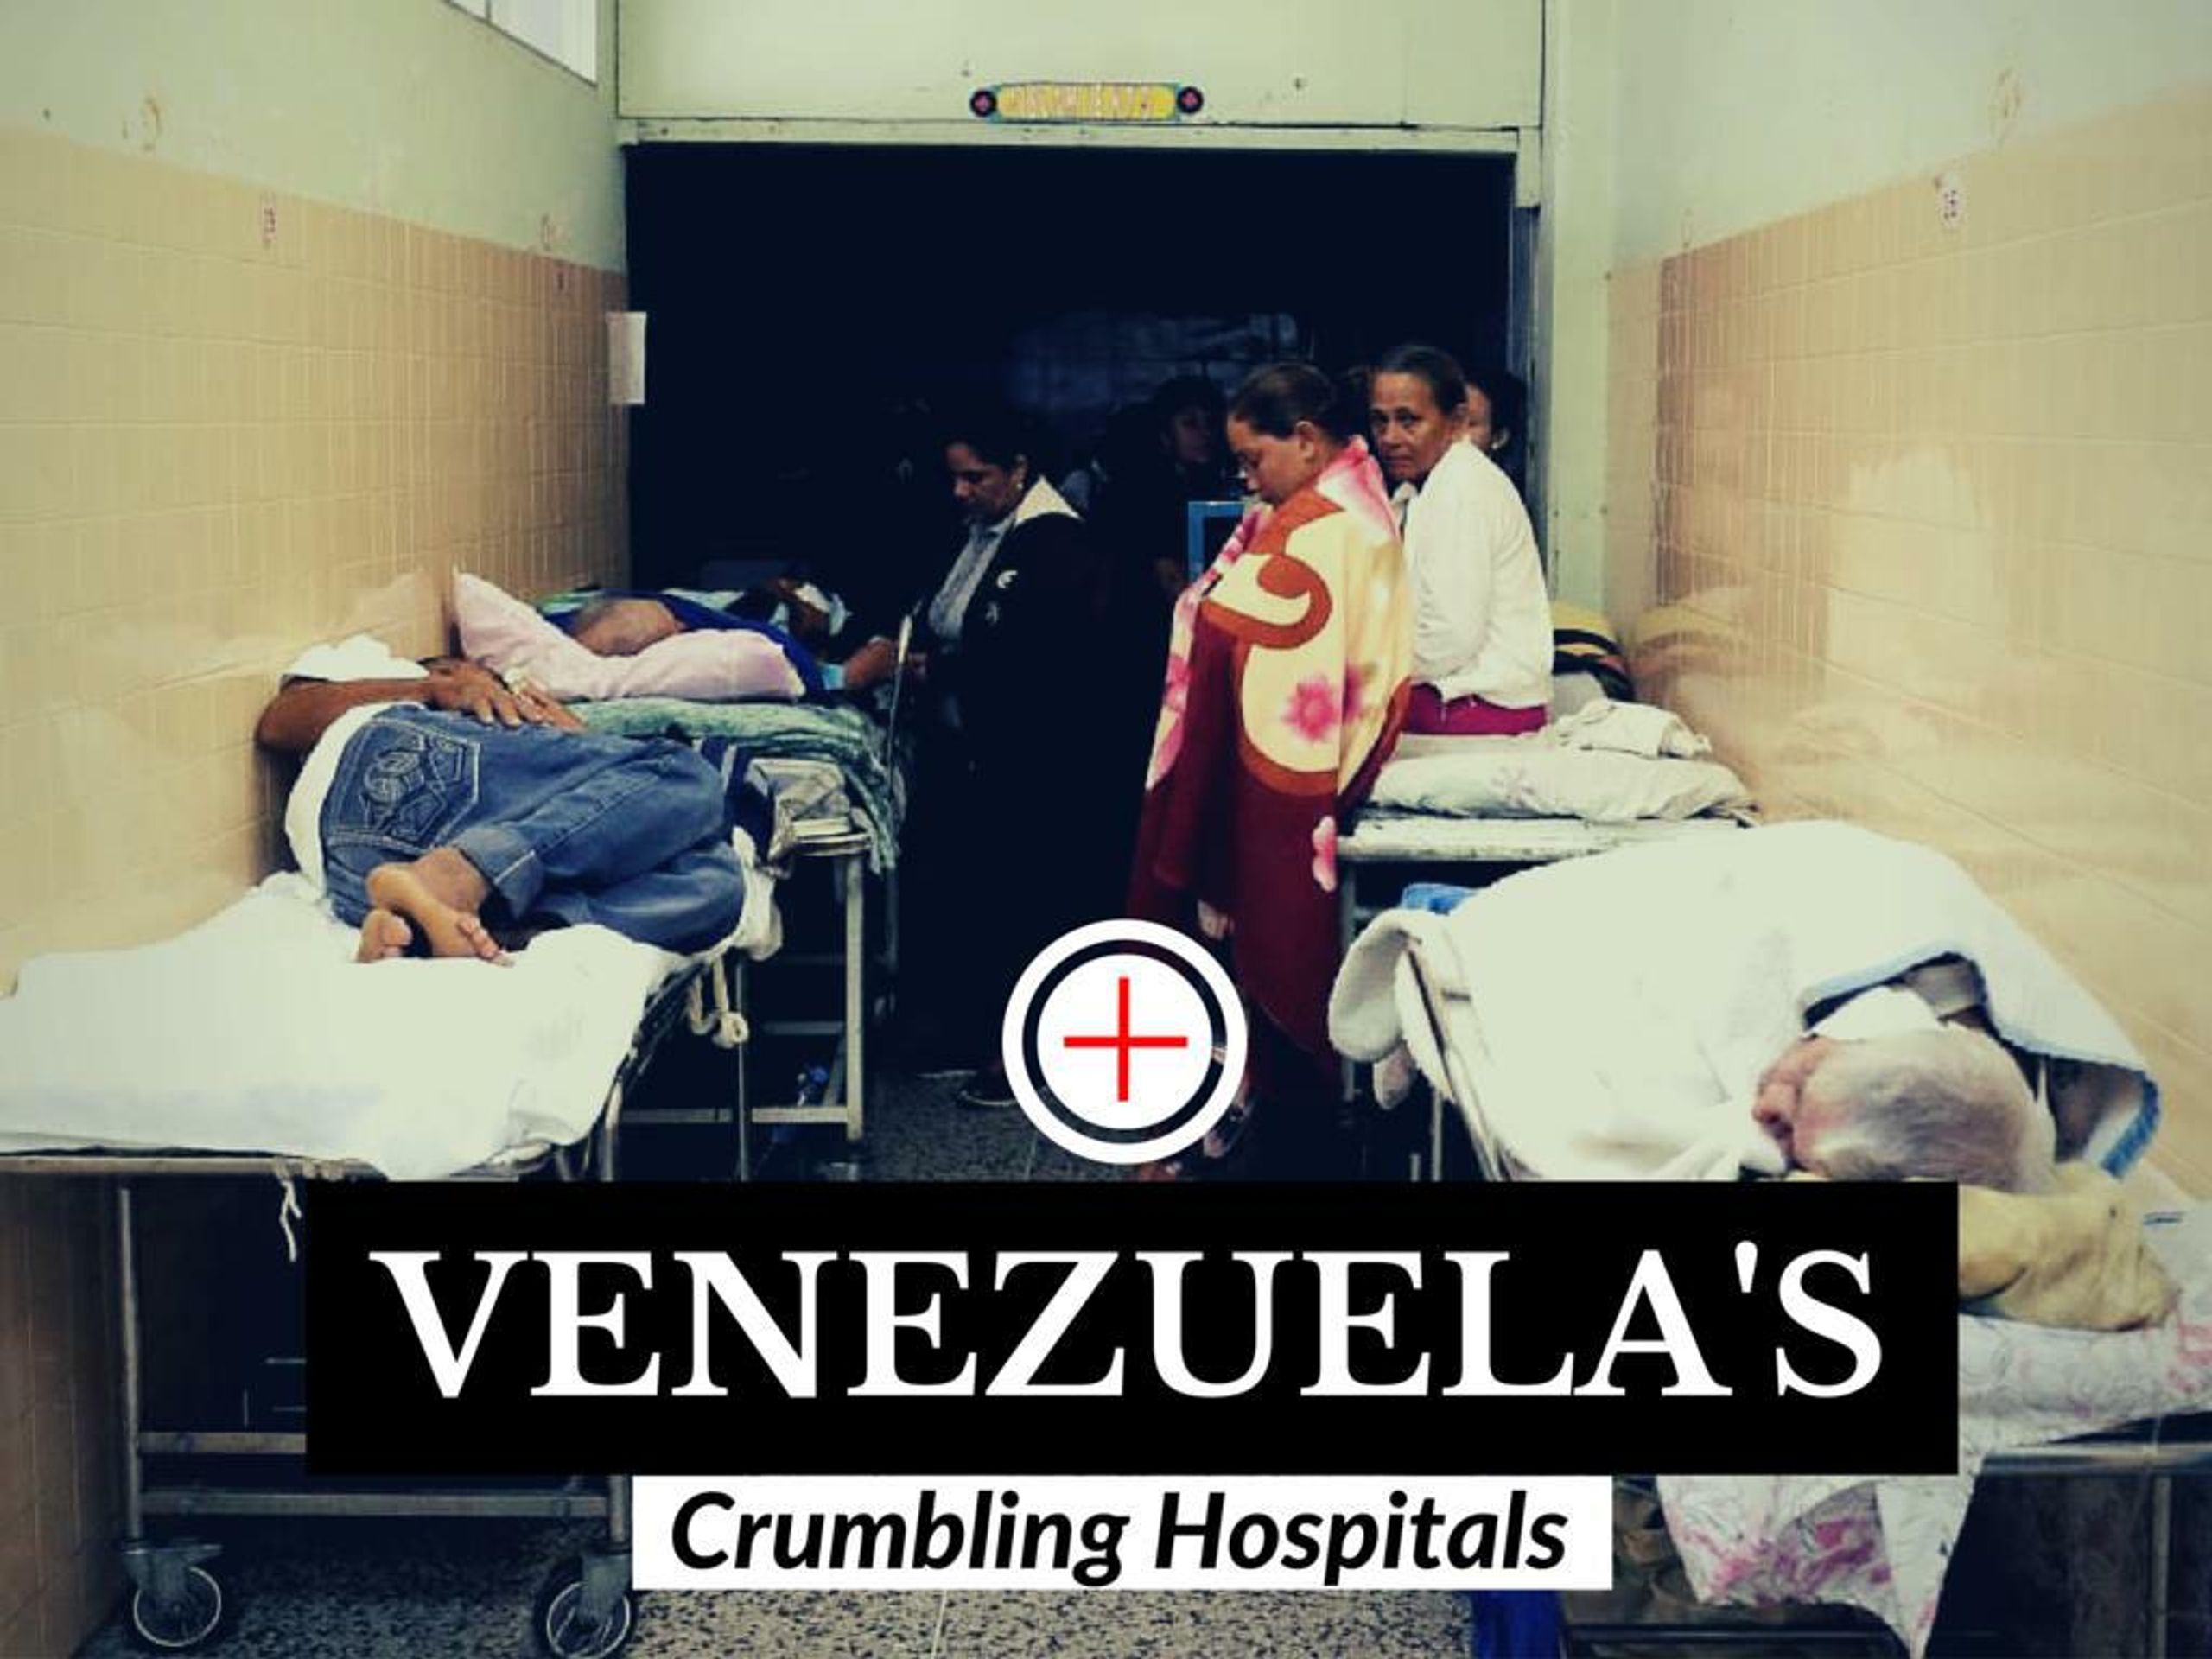 Ppt Venezuela S Crumbling Hospitals Powerpoint Presentation Free Download Id 7366699